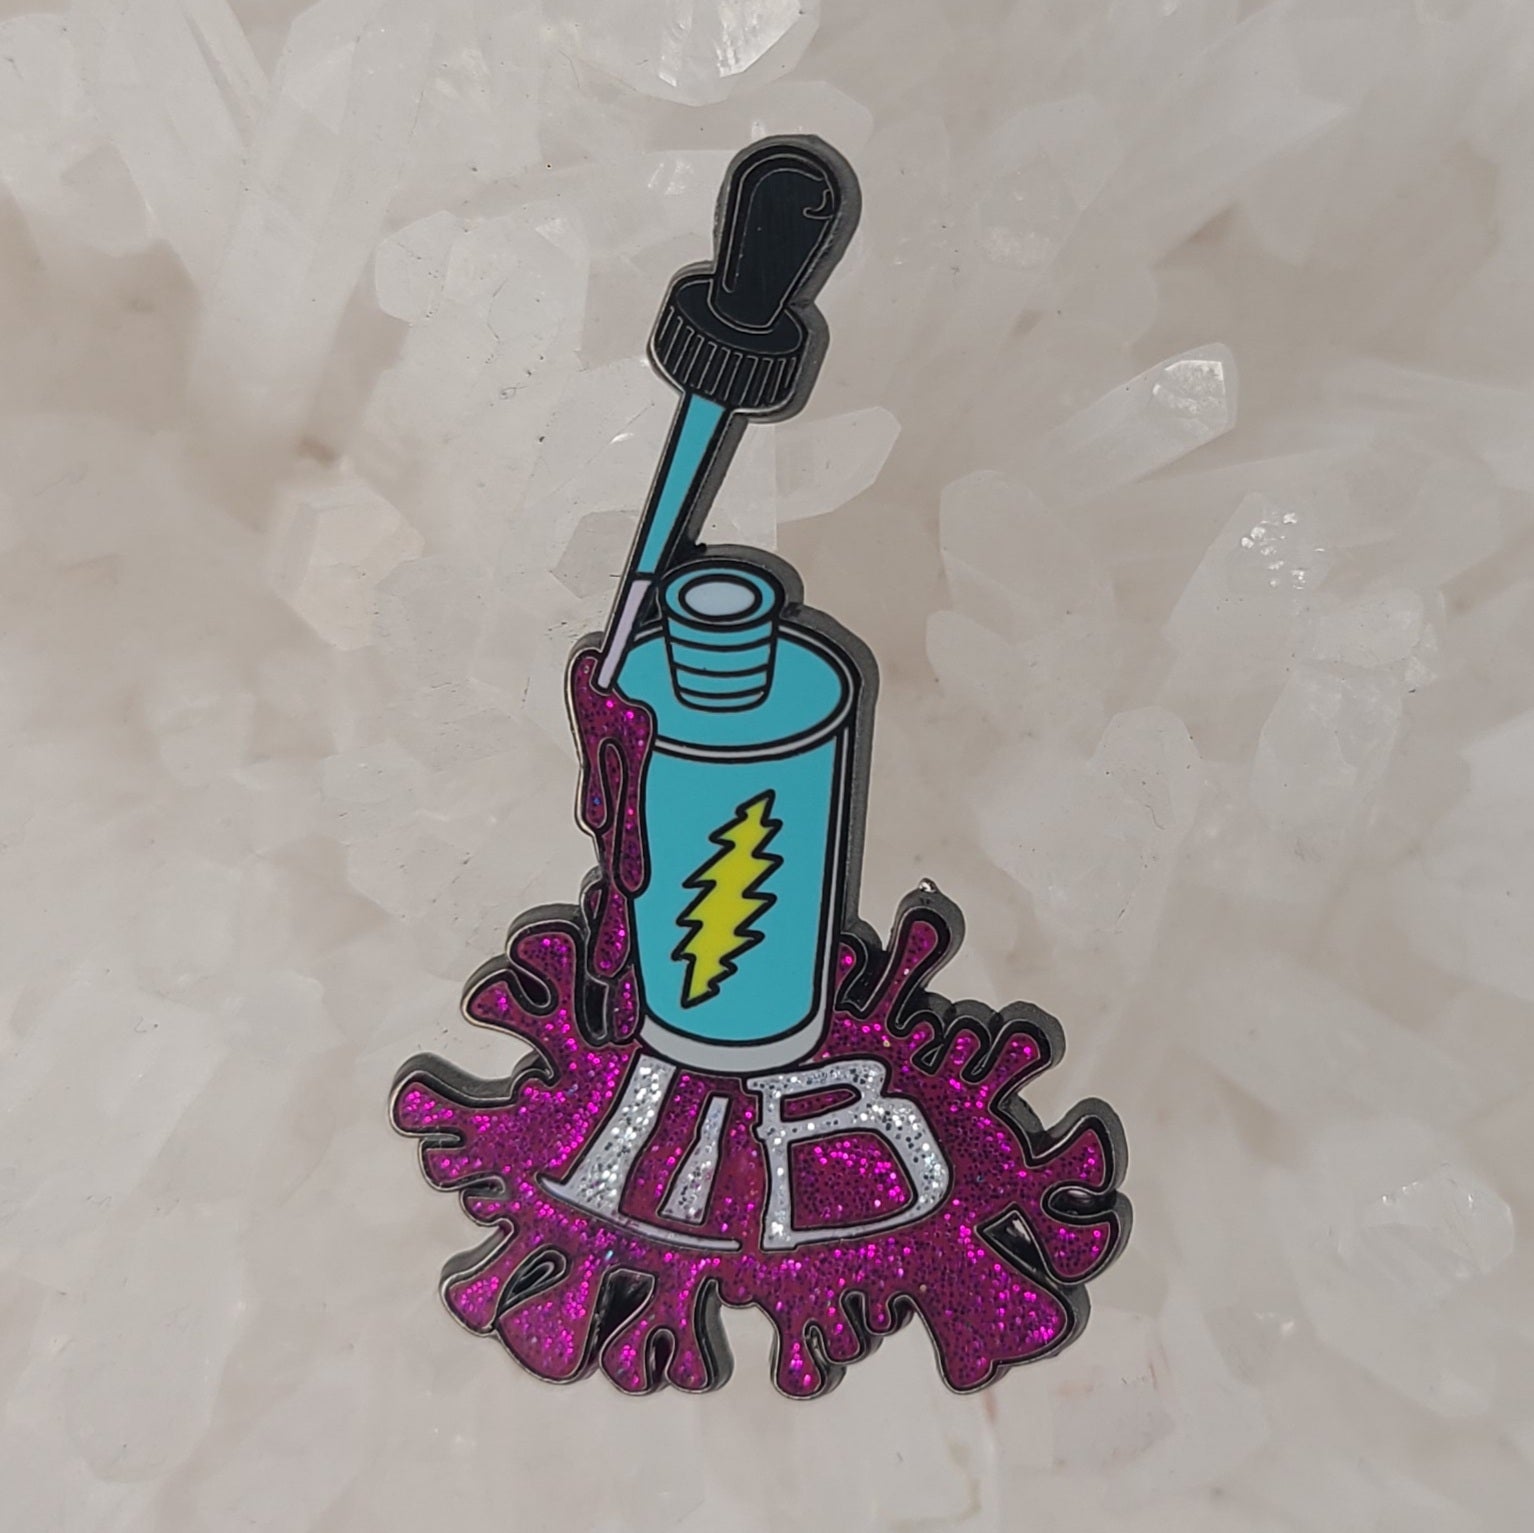 Lightning In a Bottle Grateful Festival Dead Lot LSD Dropper Pink Enamel Pins Hat Pins Lapel Pin Brooch Badge Festival Pin